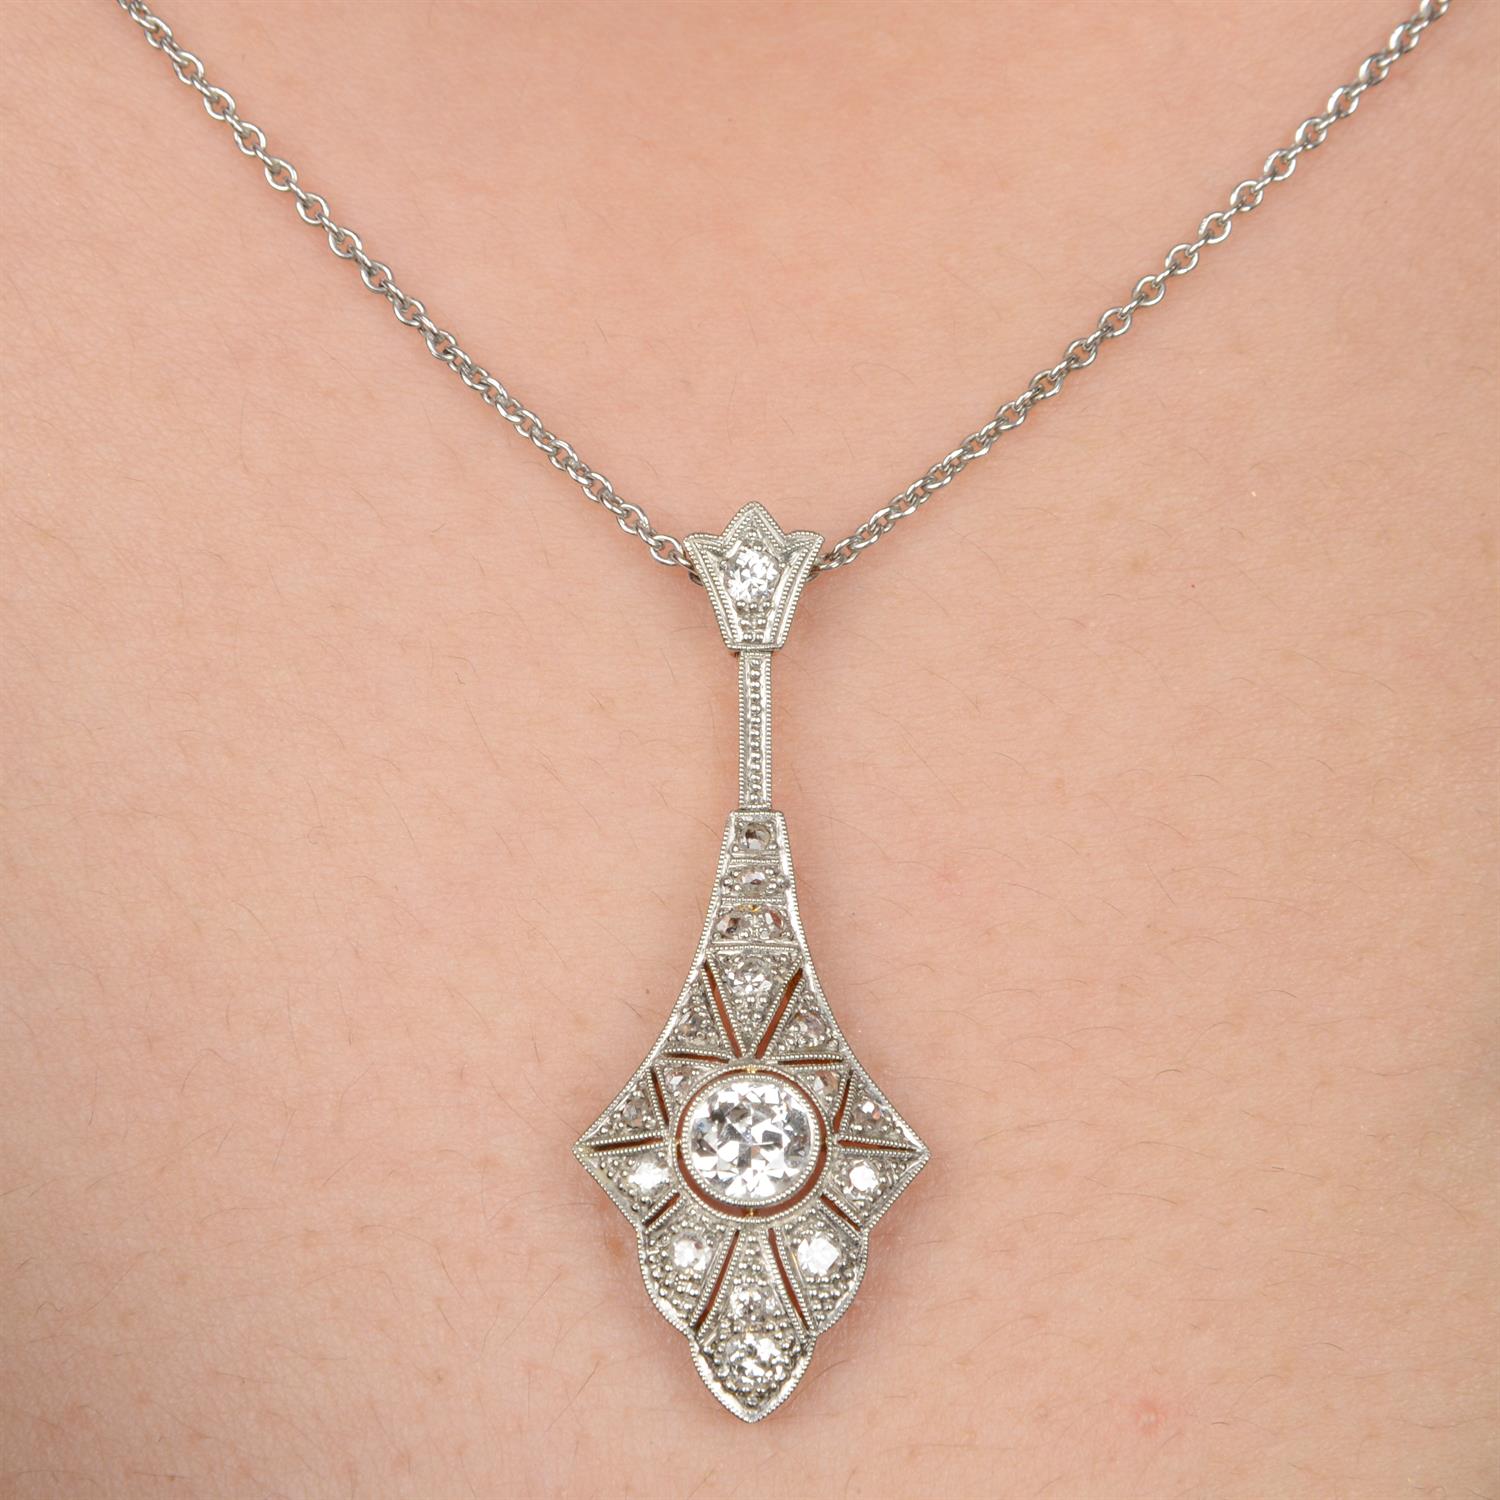 Diamond pendant, on chain - Image 6 of 6